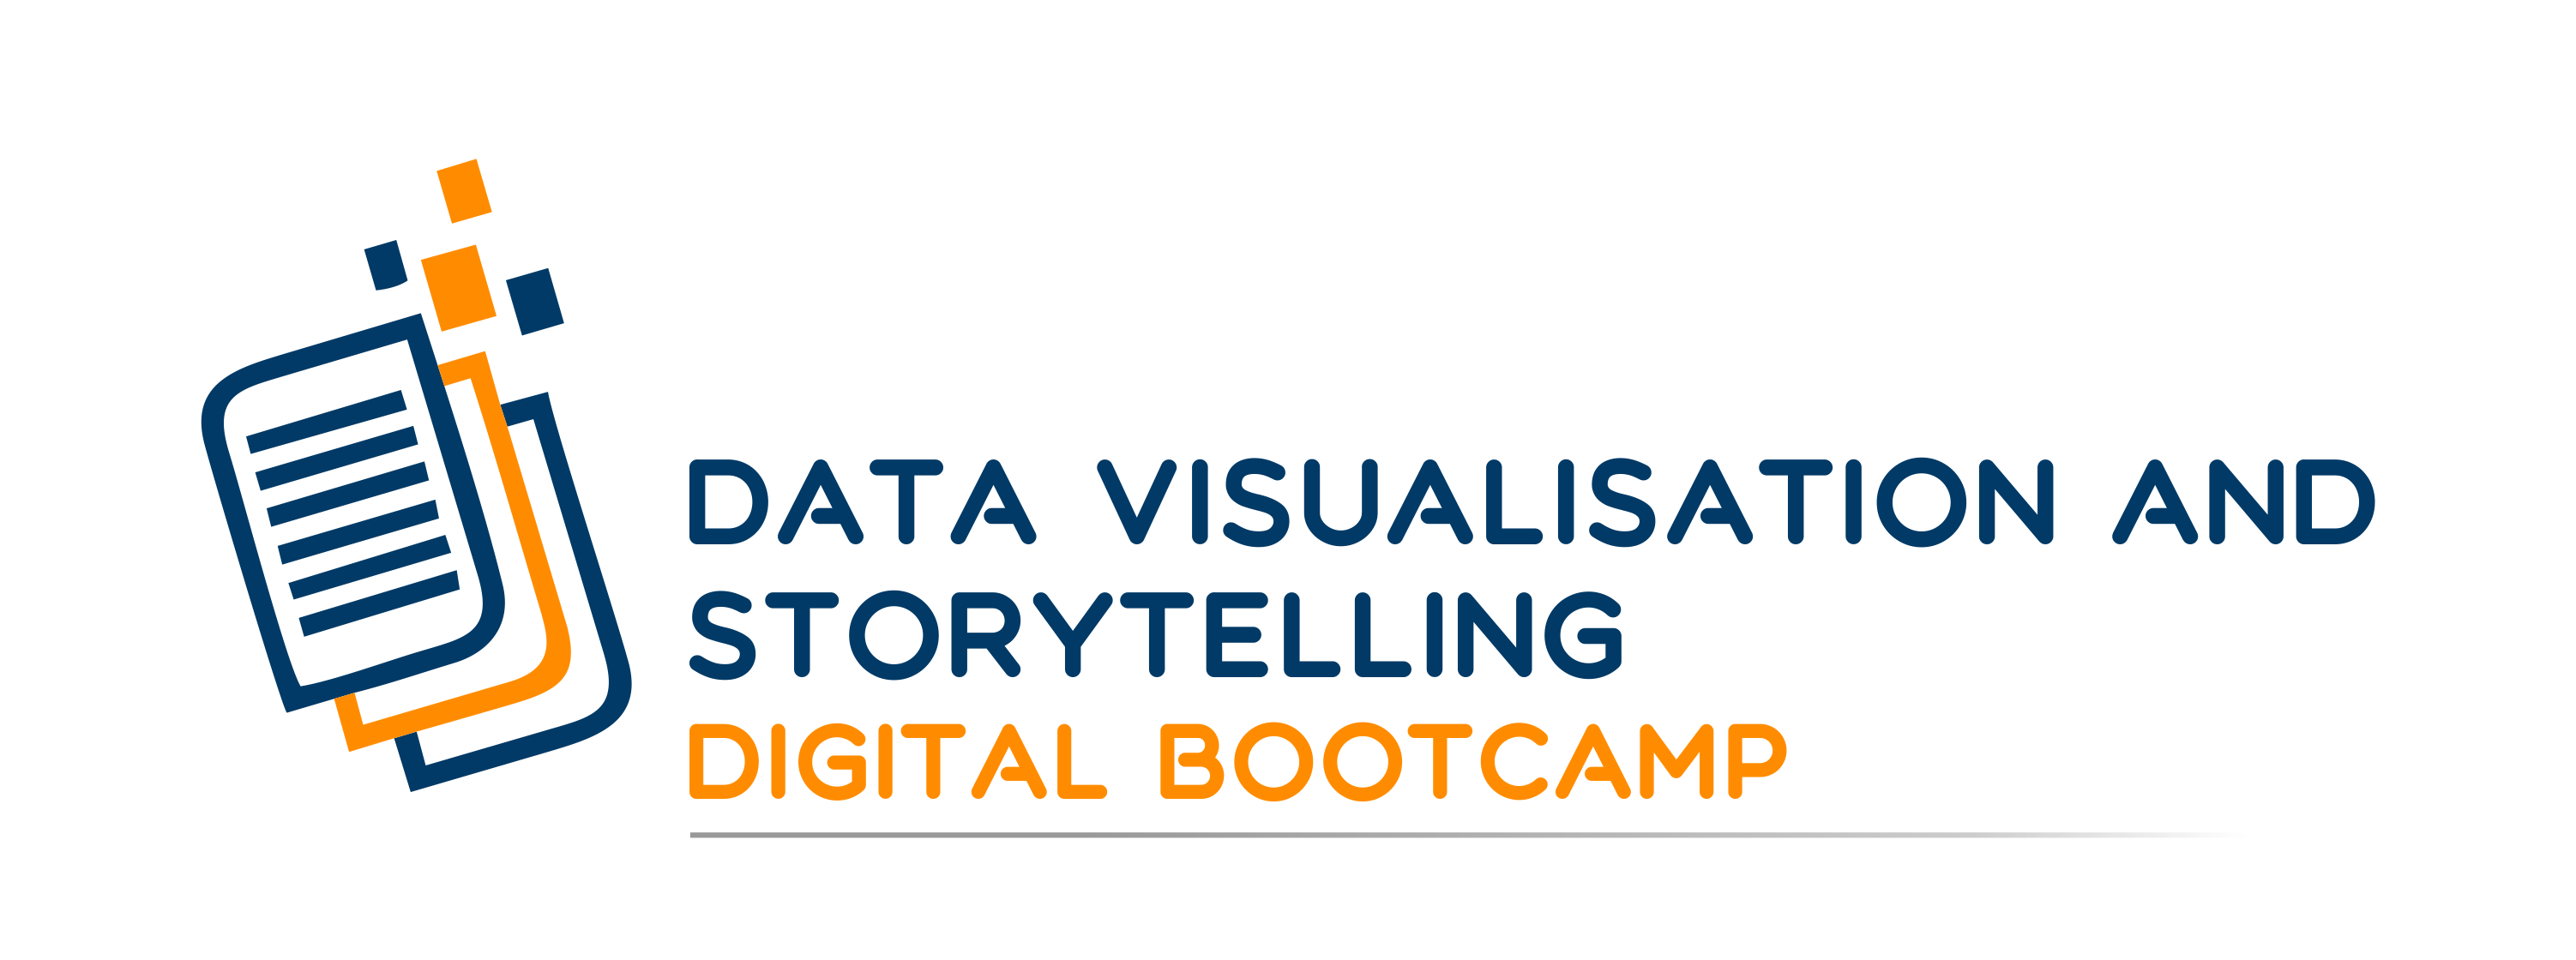 Data Visualization and Storytelling Bootcamp